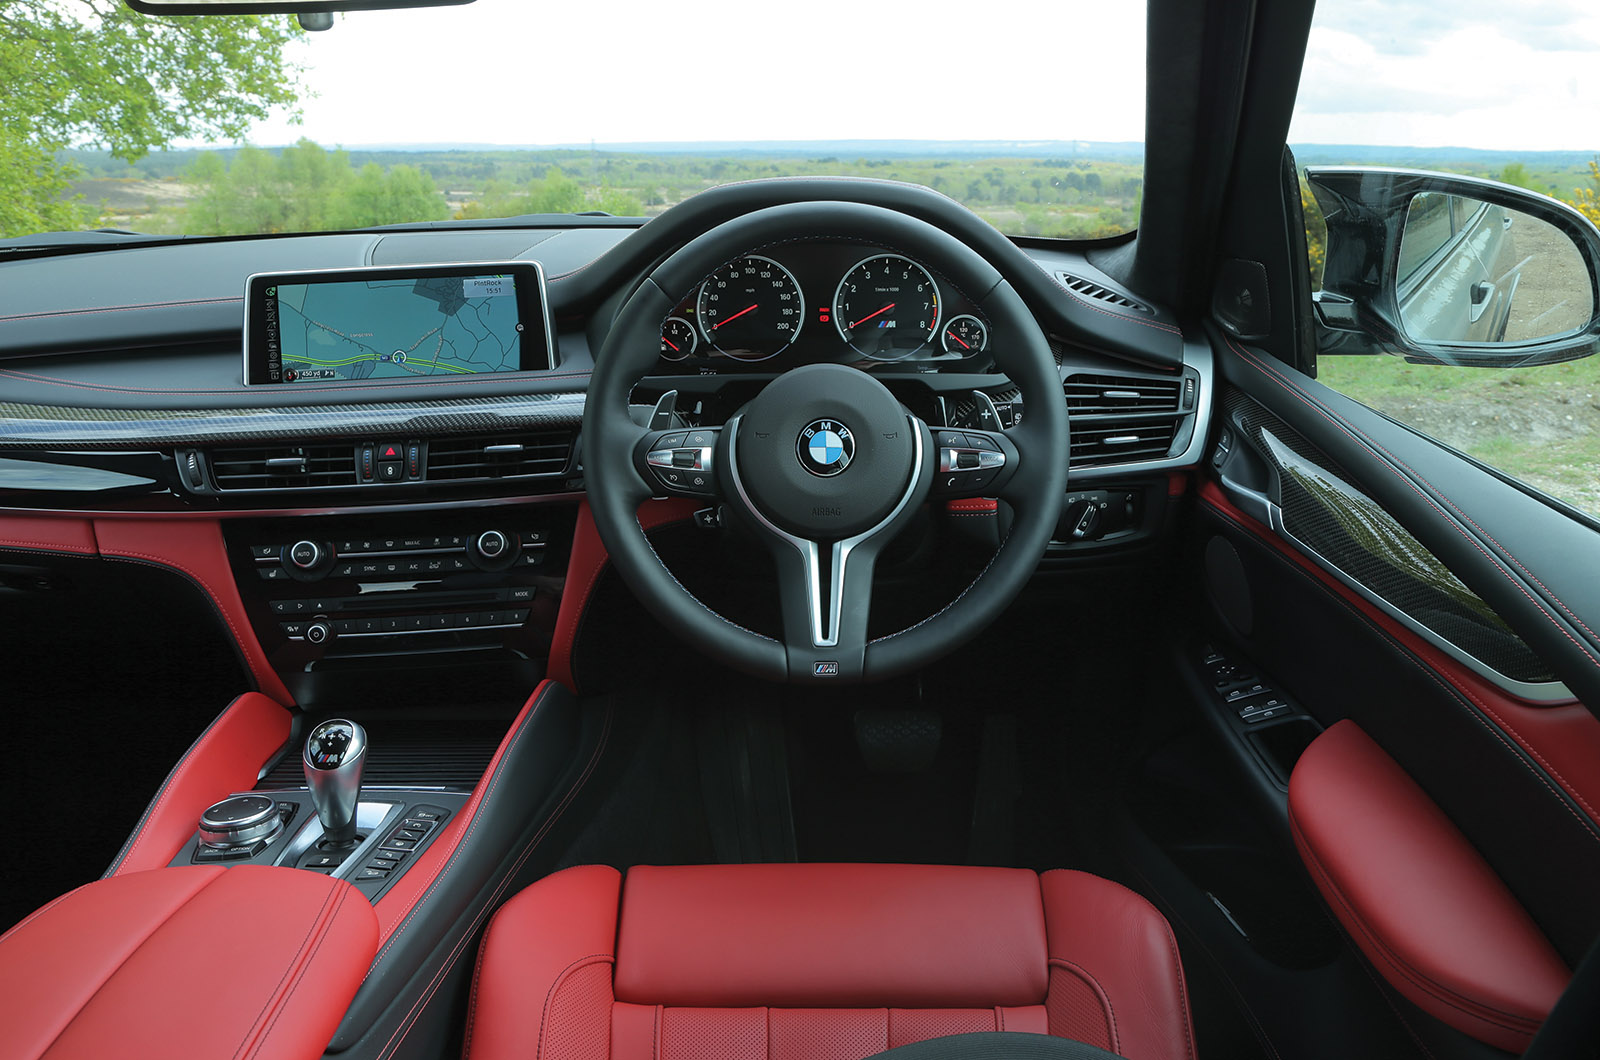 BMW X5 M's interior